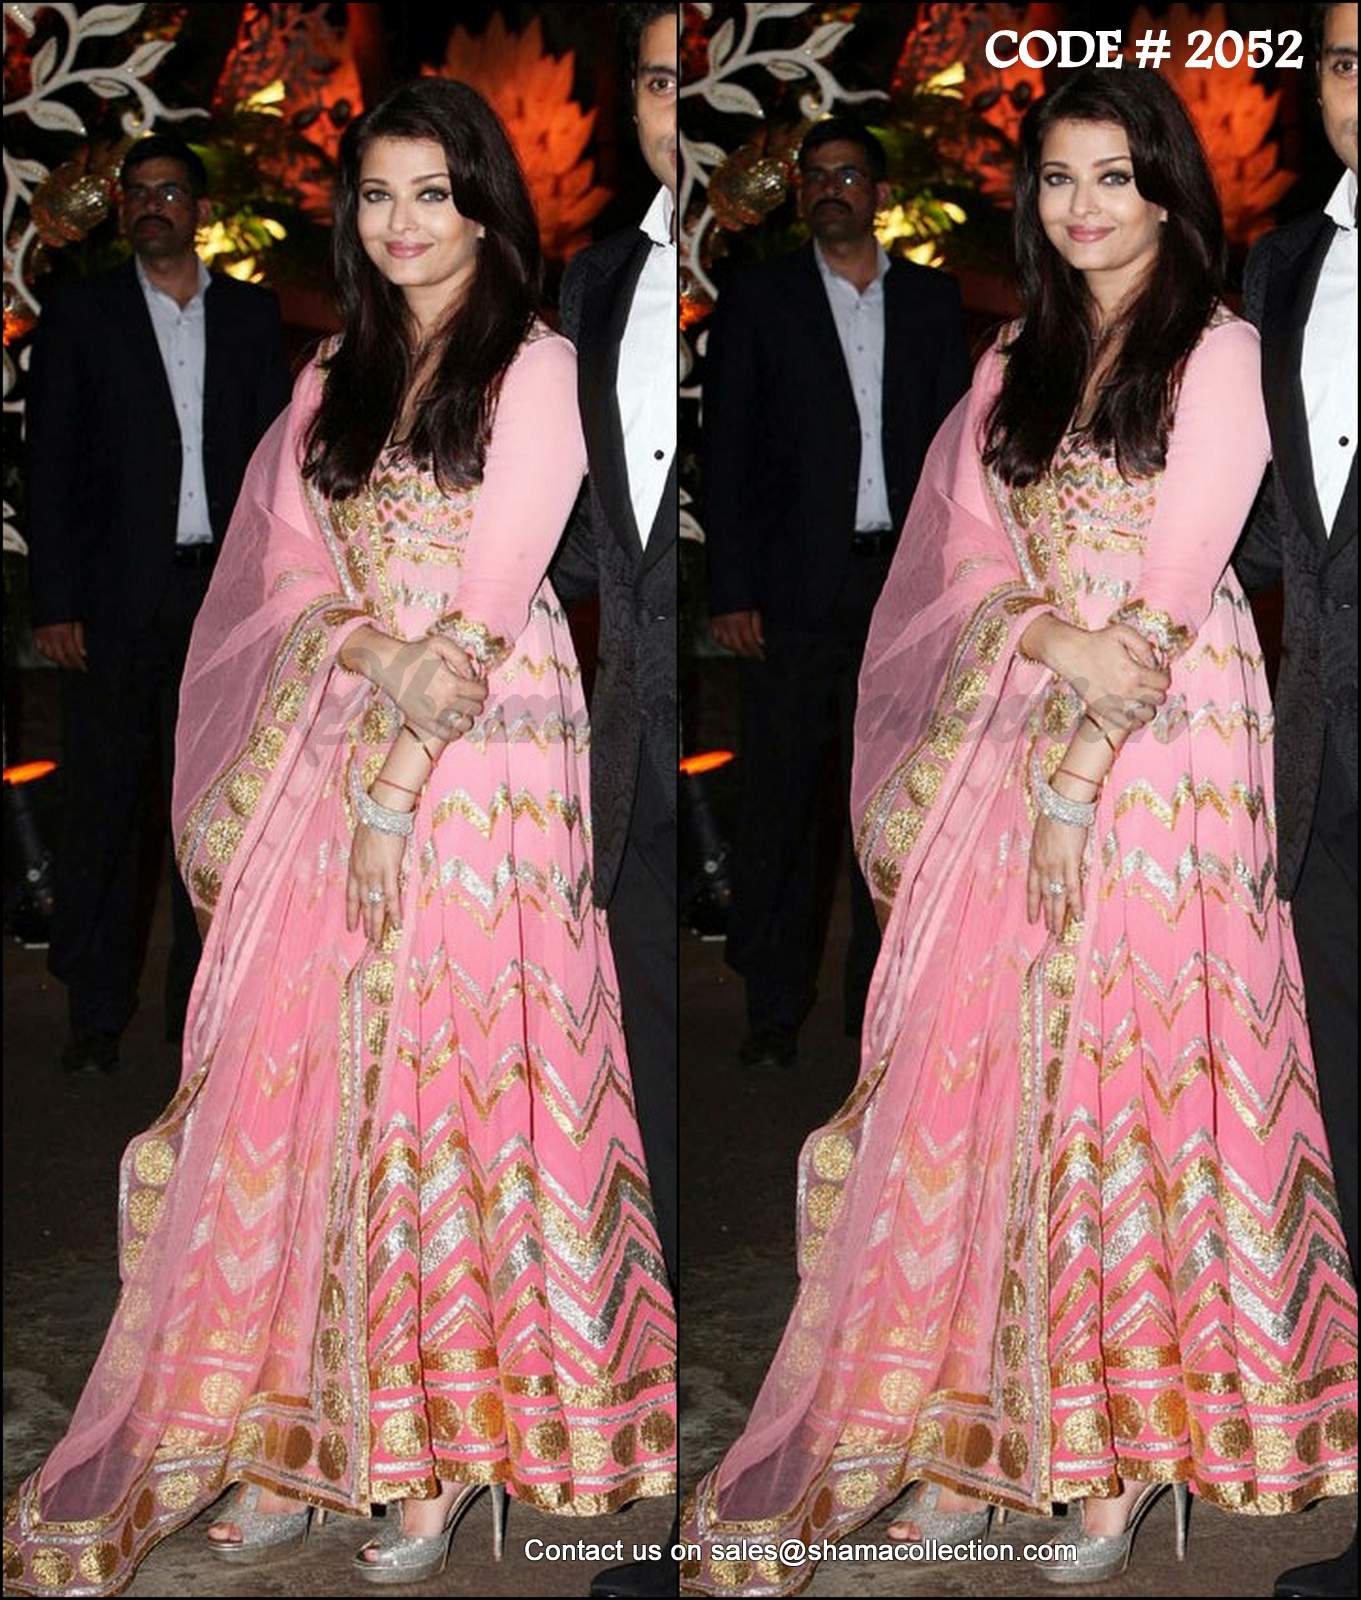 Aishwarya Rai in pink dress | Fashion, Dress, Asian fashion